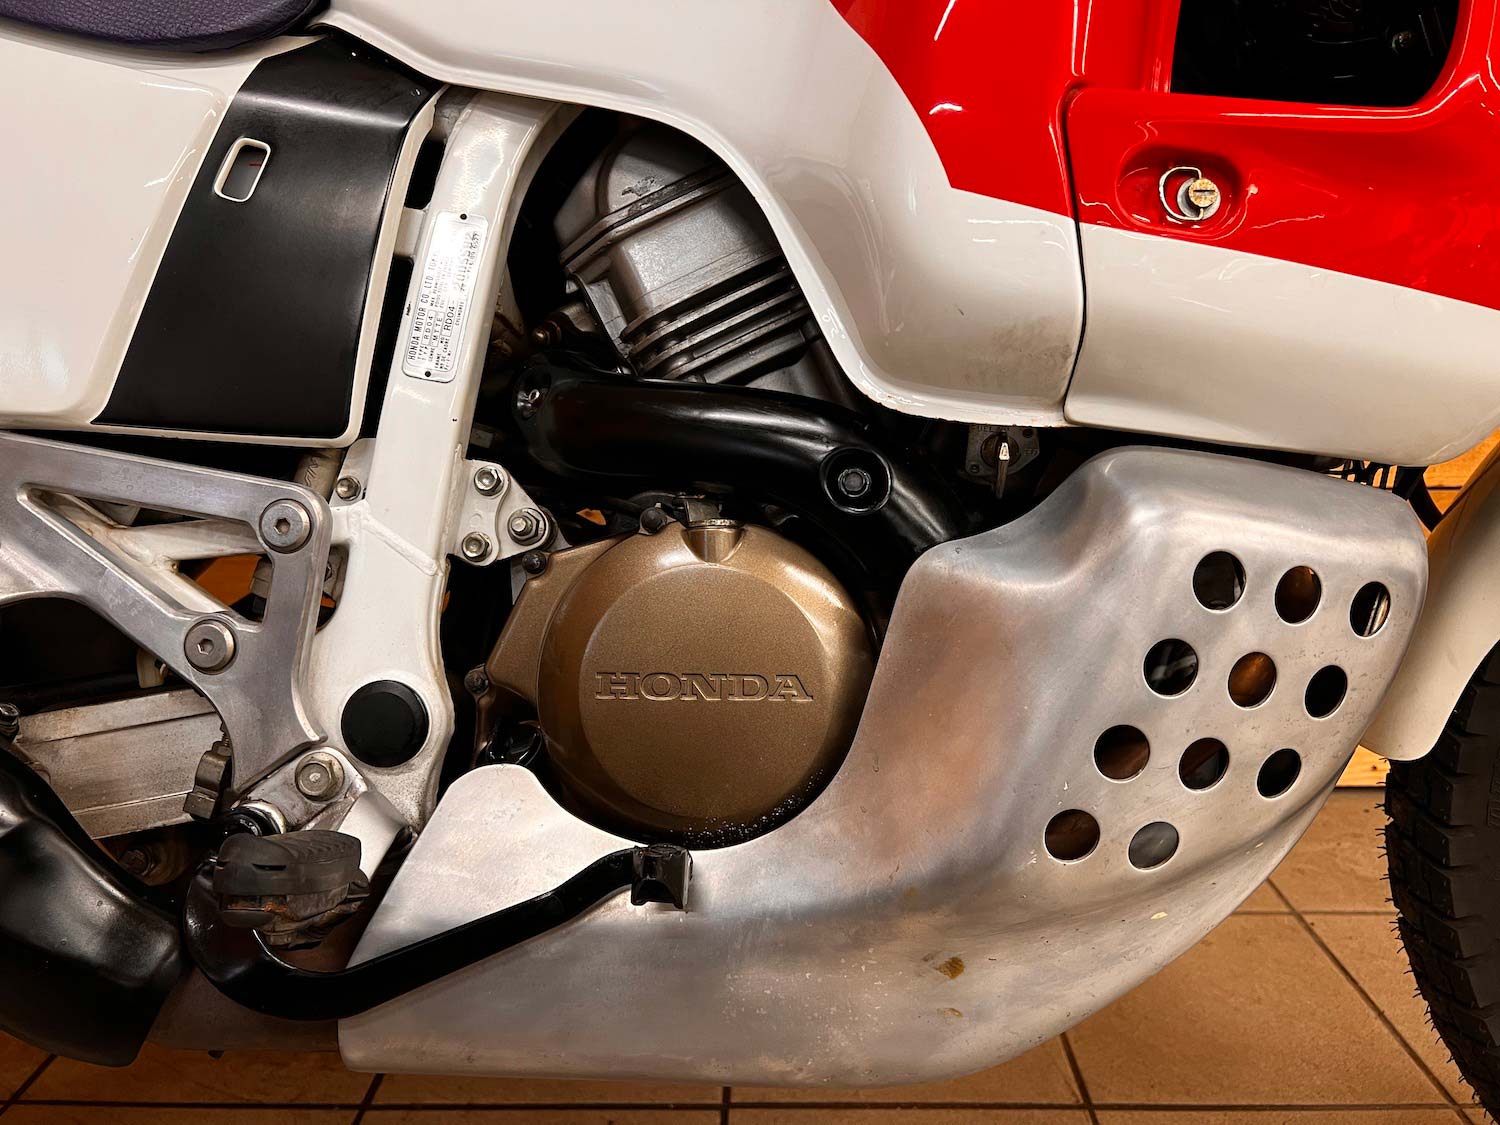 Honda_at_xrv750_cezanne_classic_Motorcycle_4-160.jpg